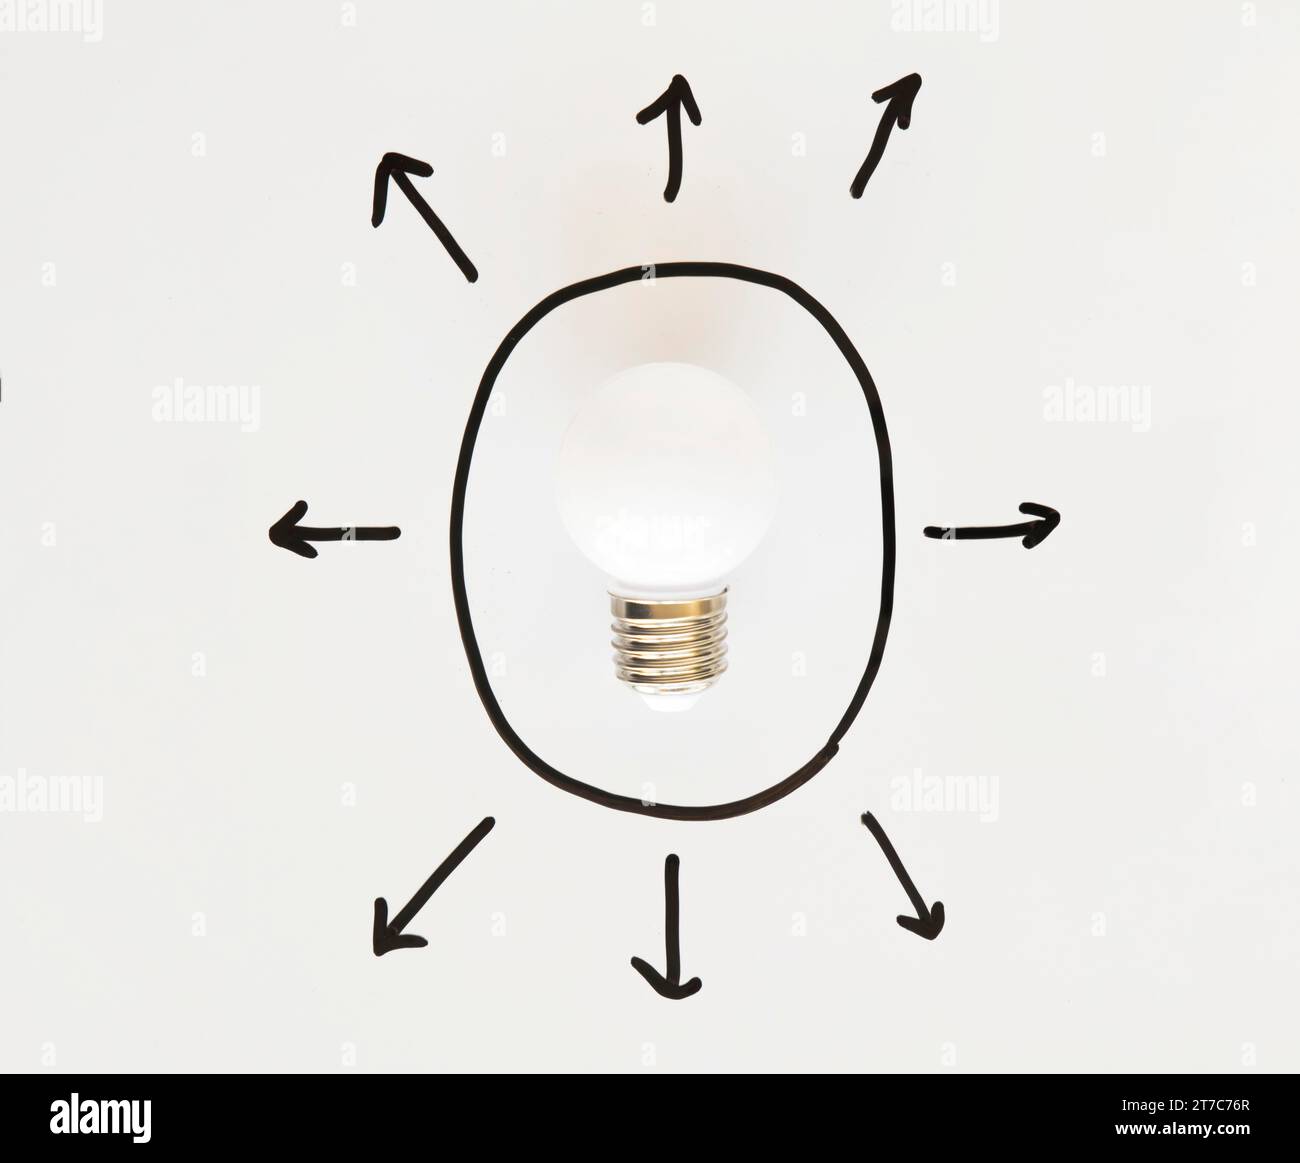 Light bulb inside hand drawn oval shape with various arrow symbols Stock Photo